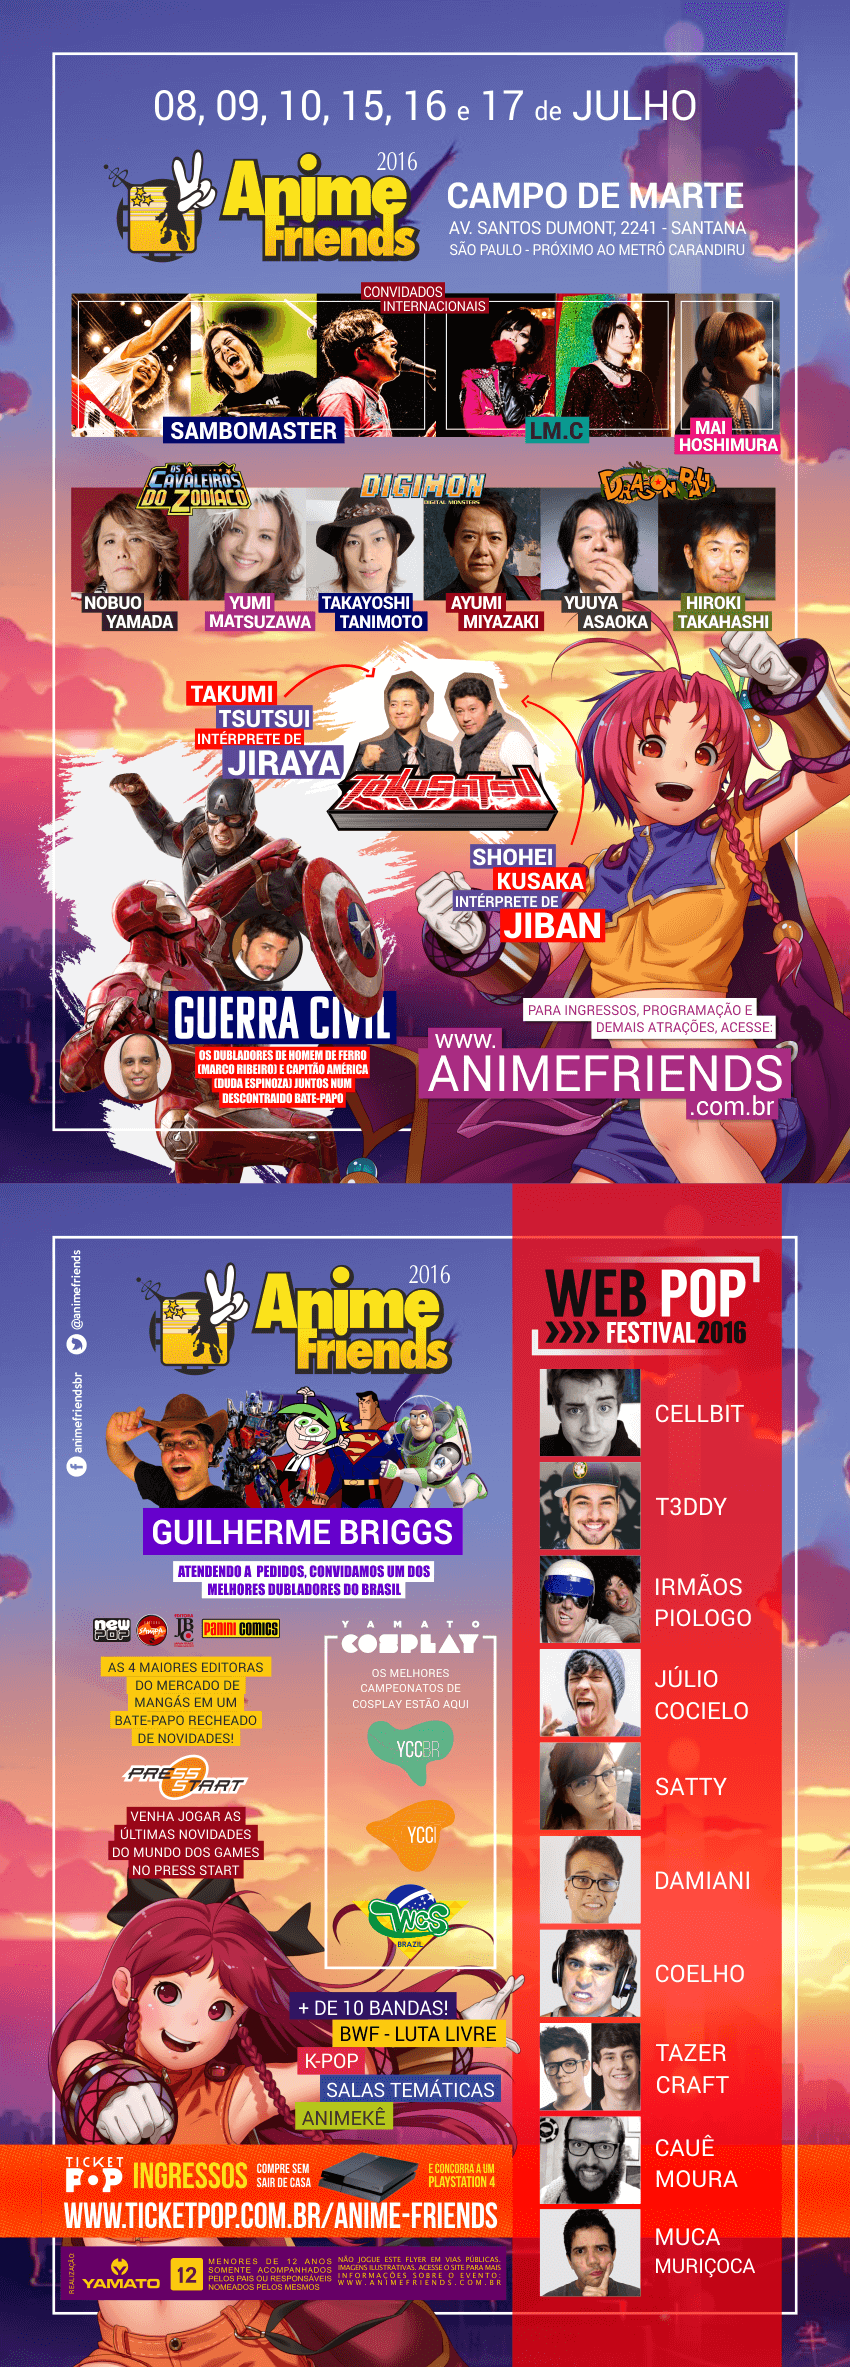 anime-friends-2016